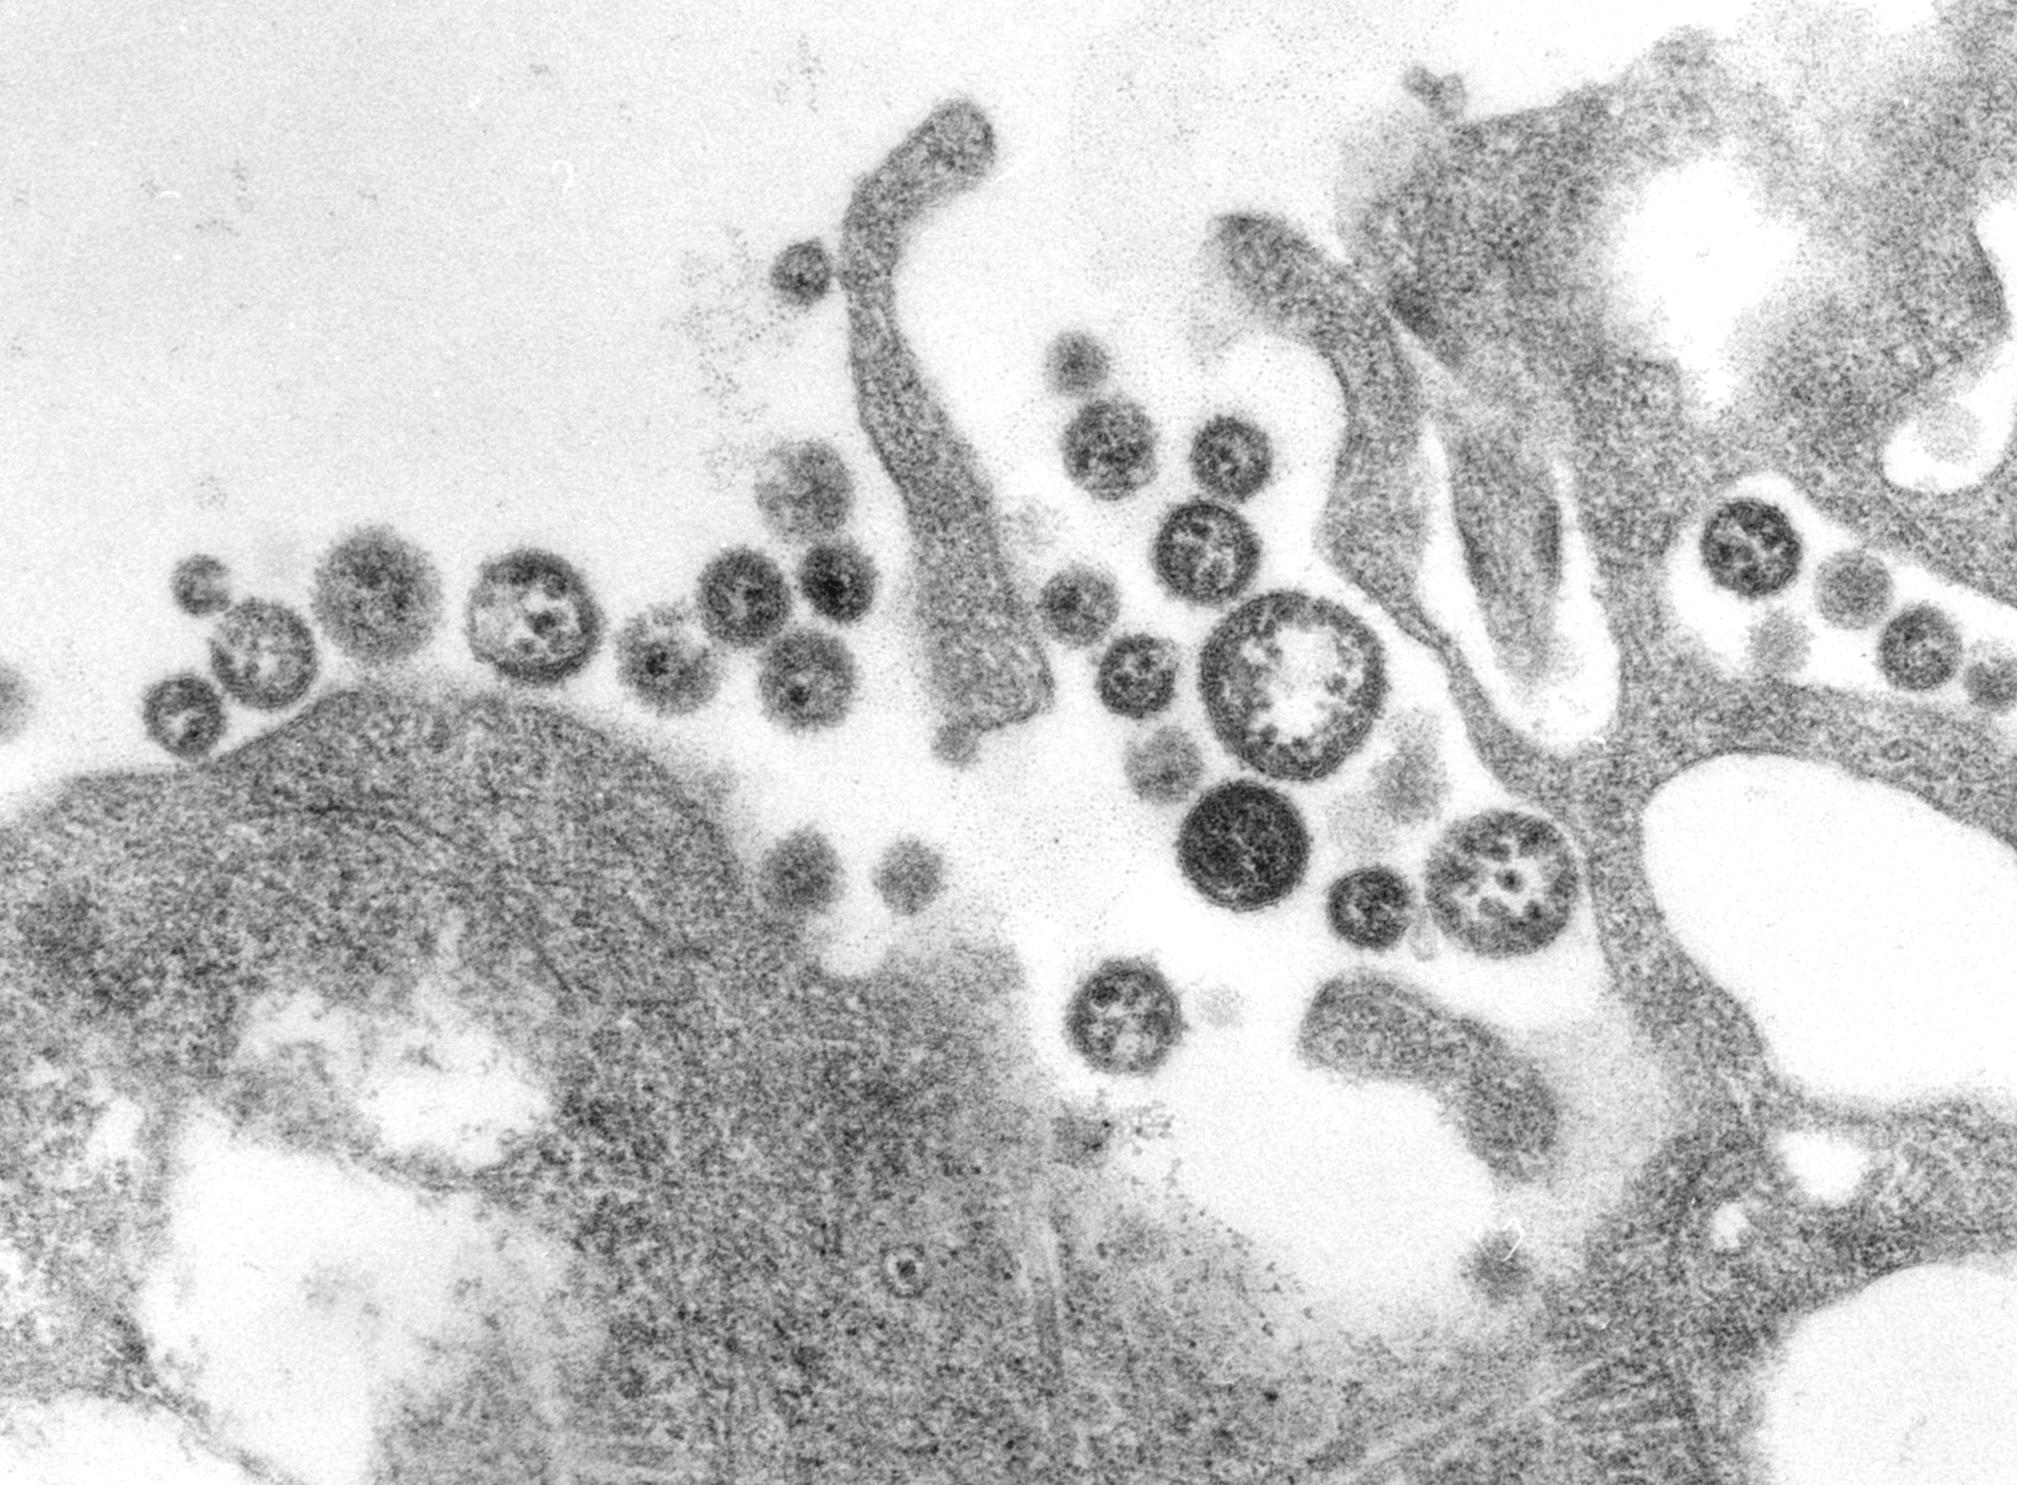 TEM micrograph of Lassa virus virions.